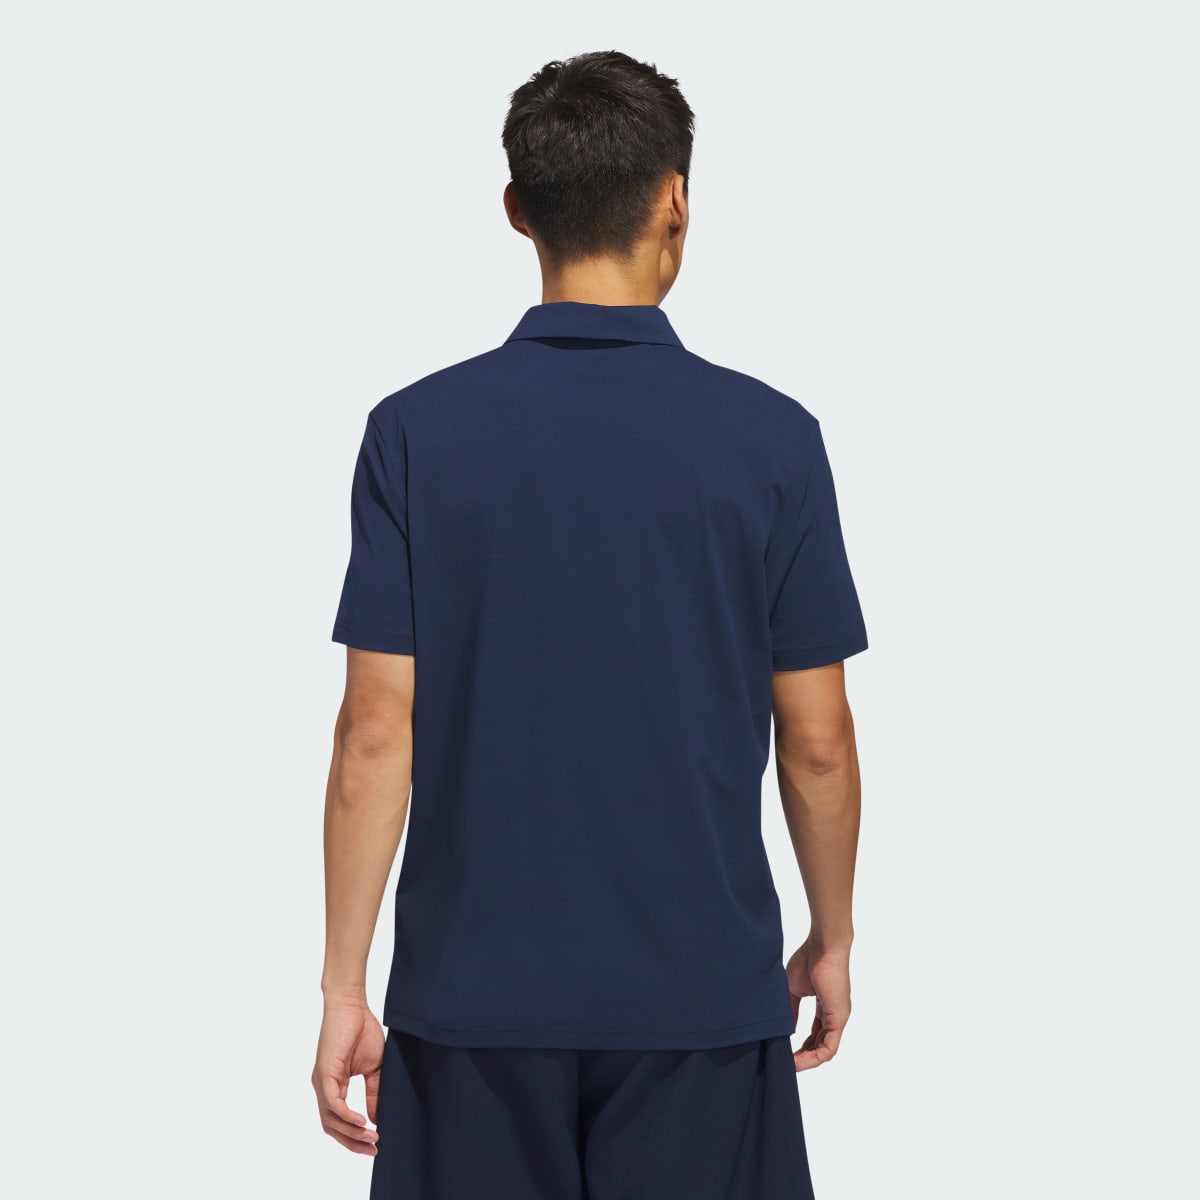 Adidas x Malbon Polo Shirt. 5